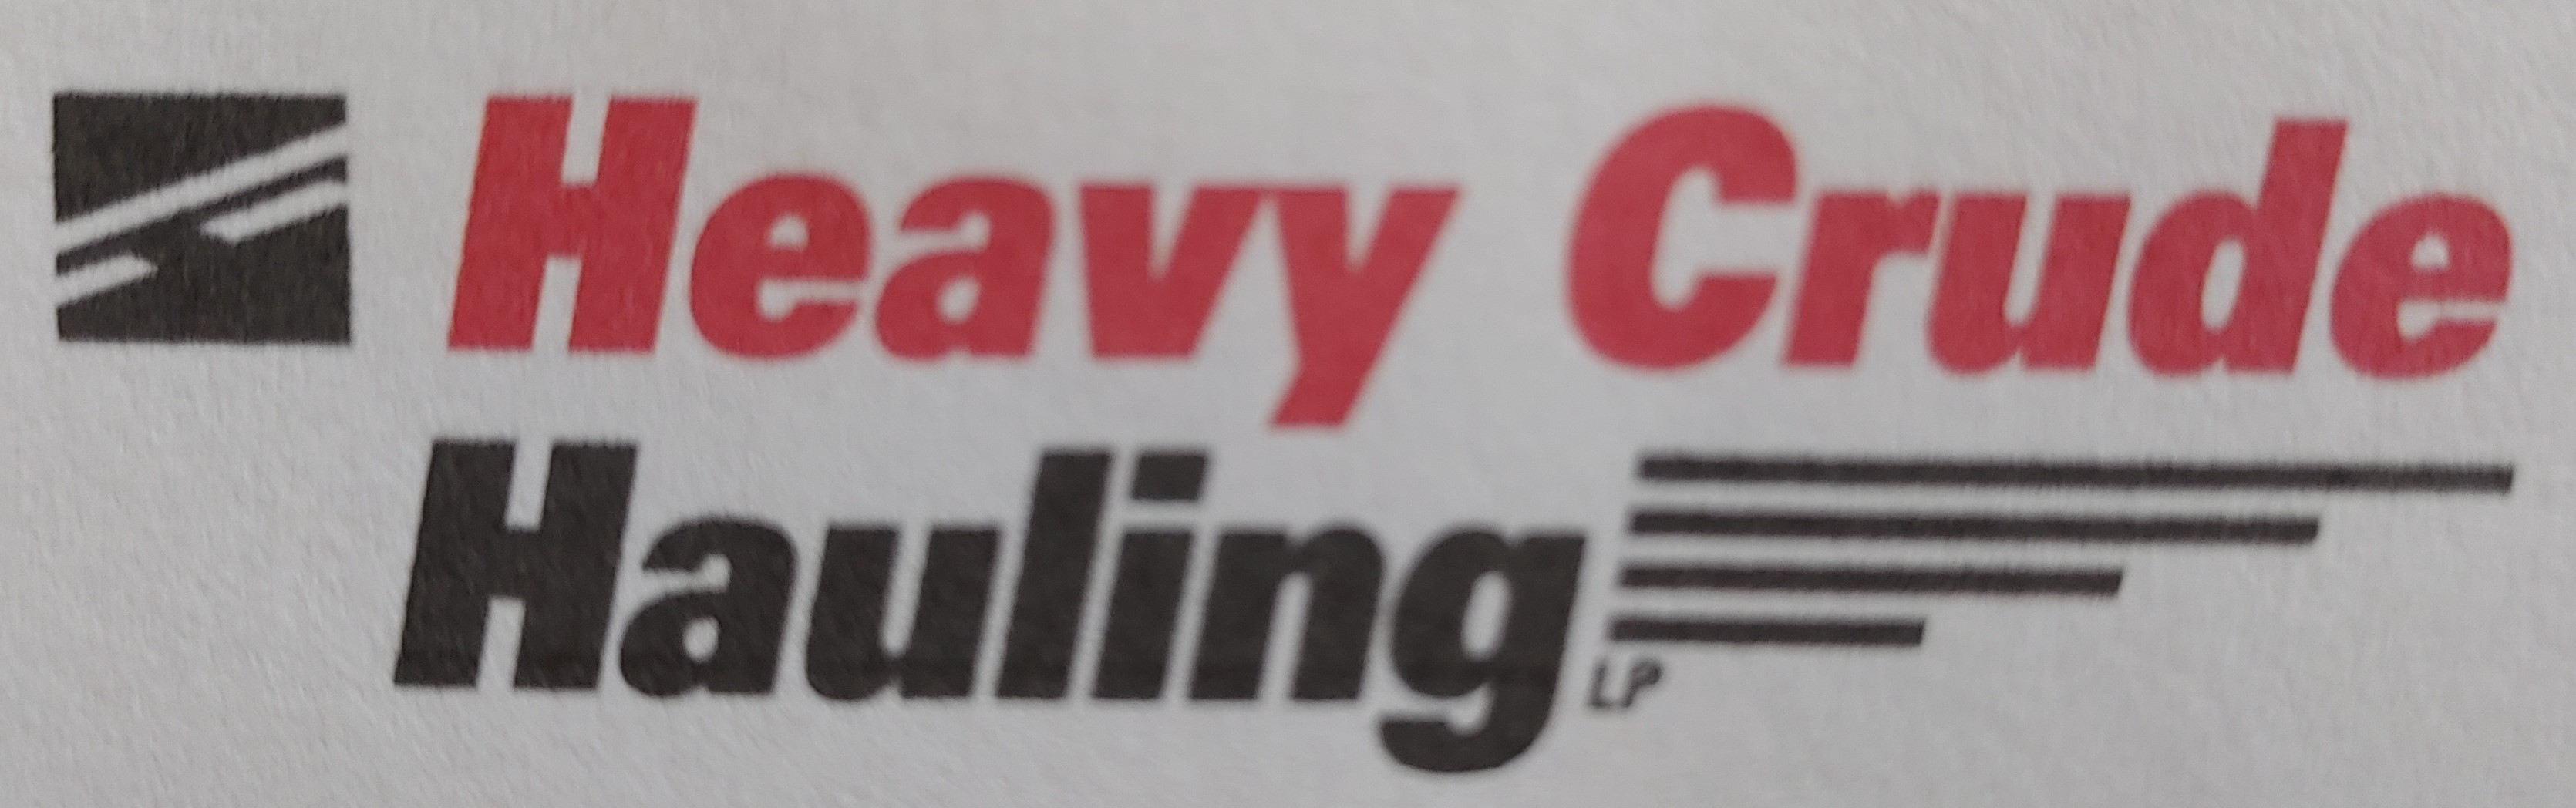 Logo-Heavy Crude Hauling